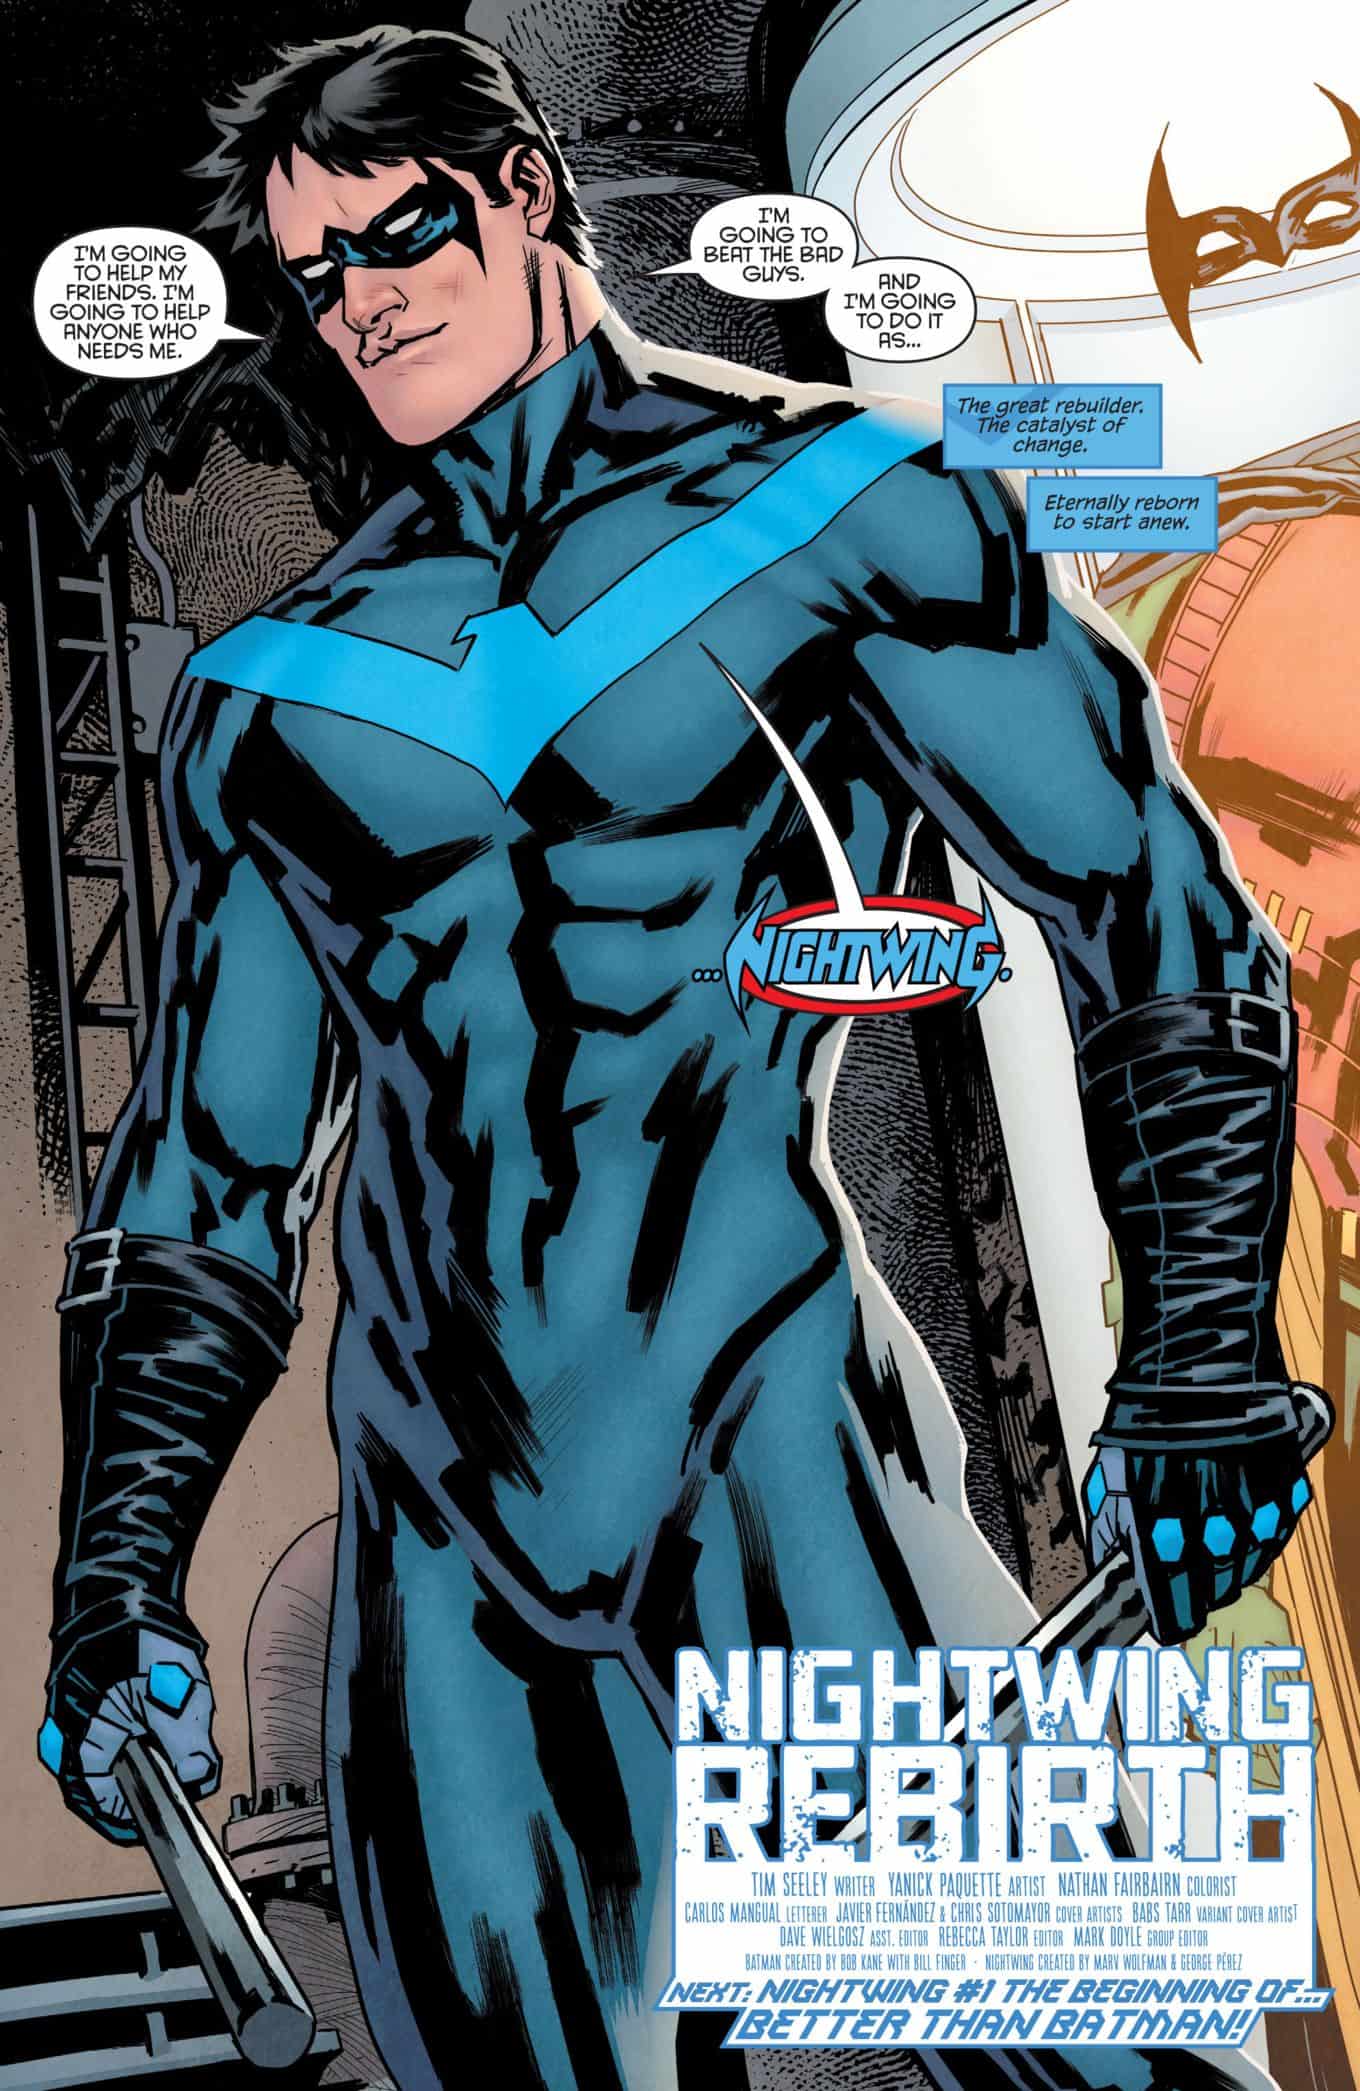 Nightwing Vs Korra Whowouldwin